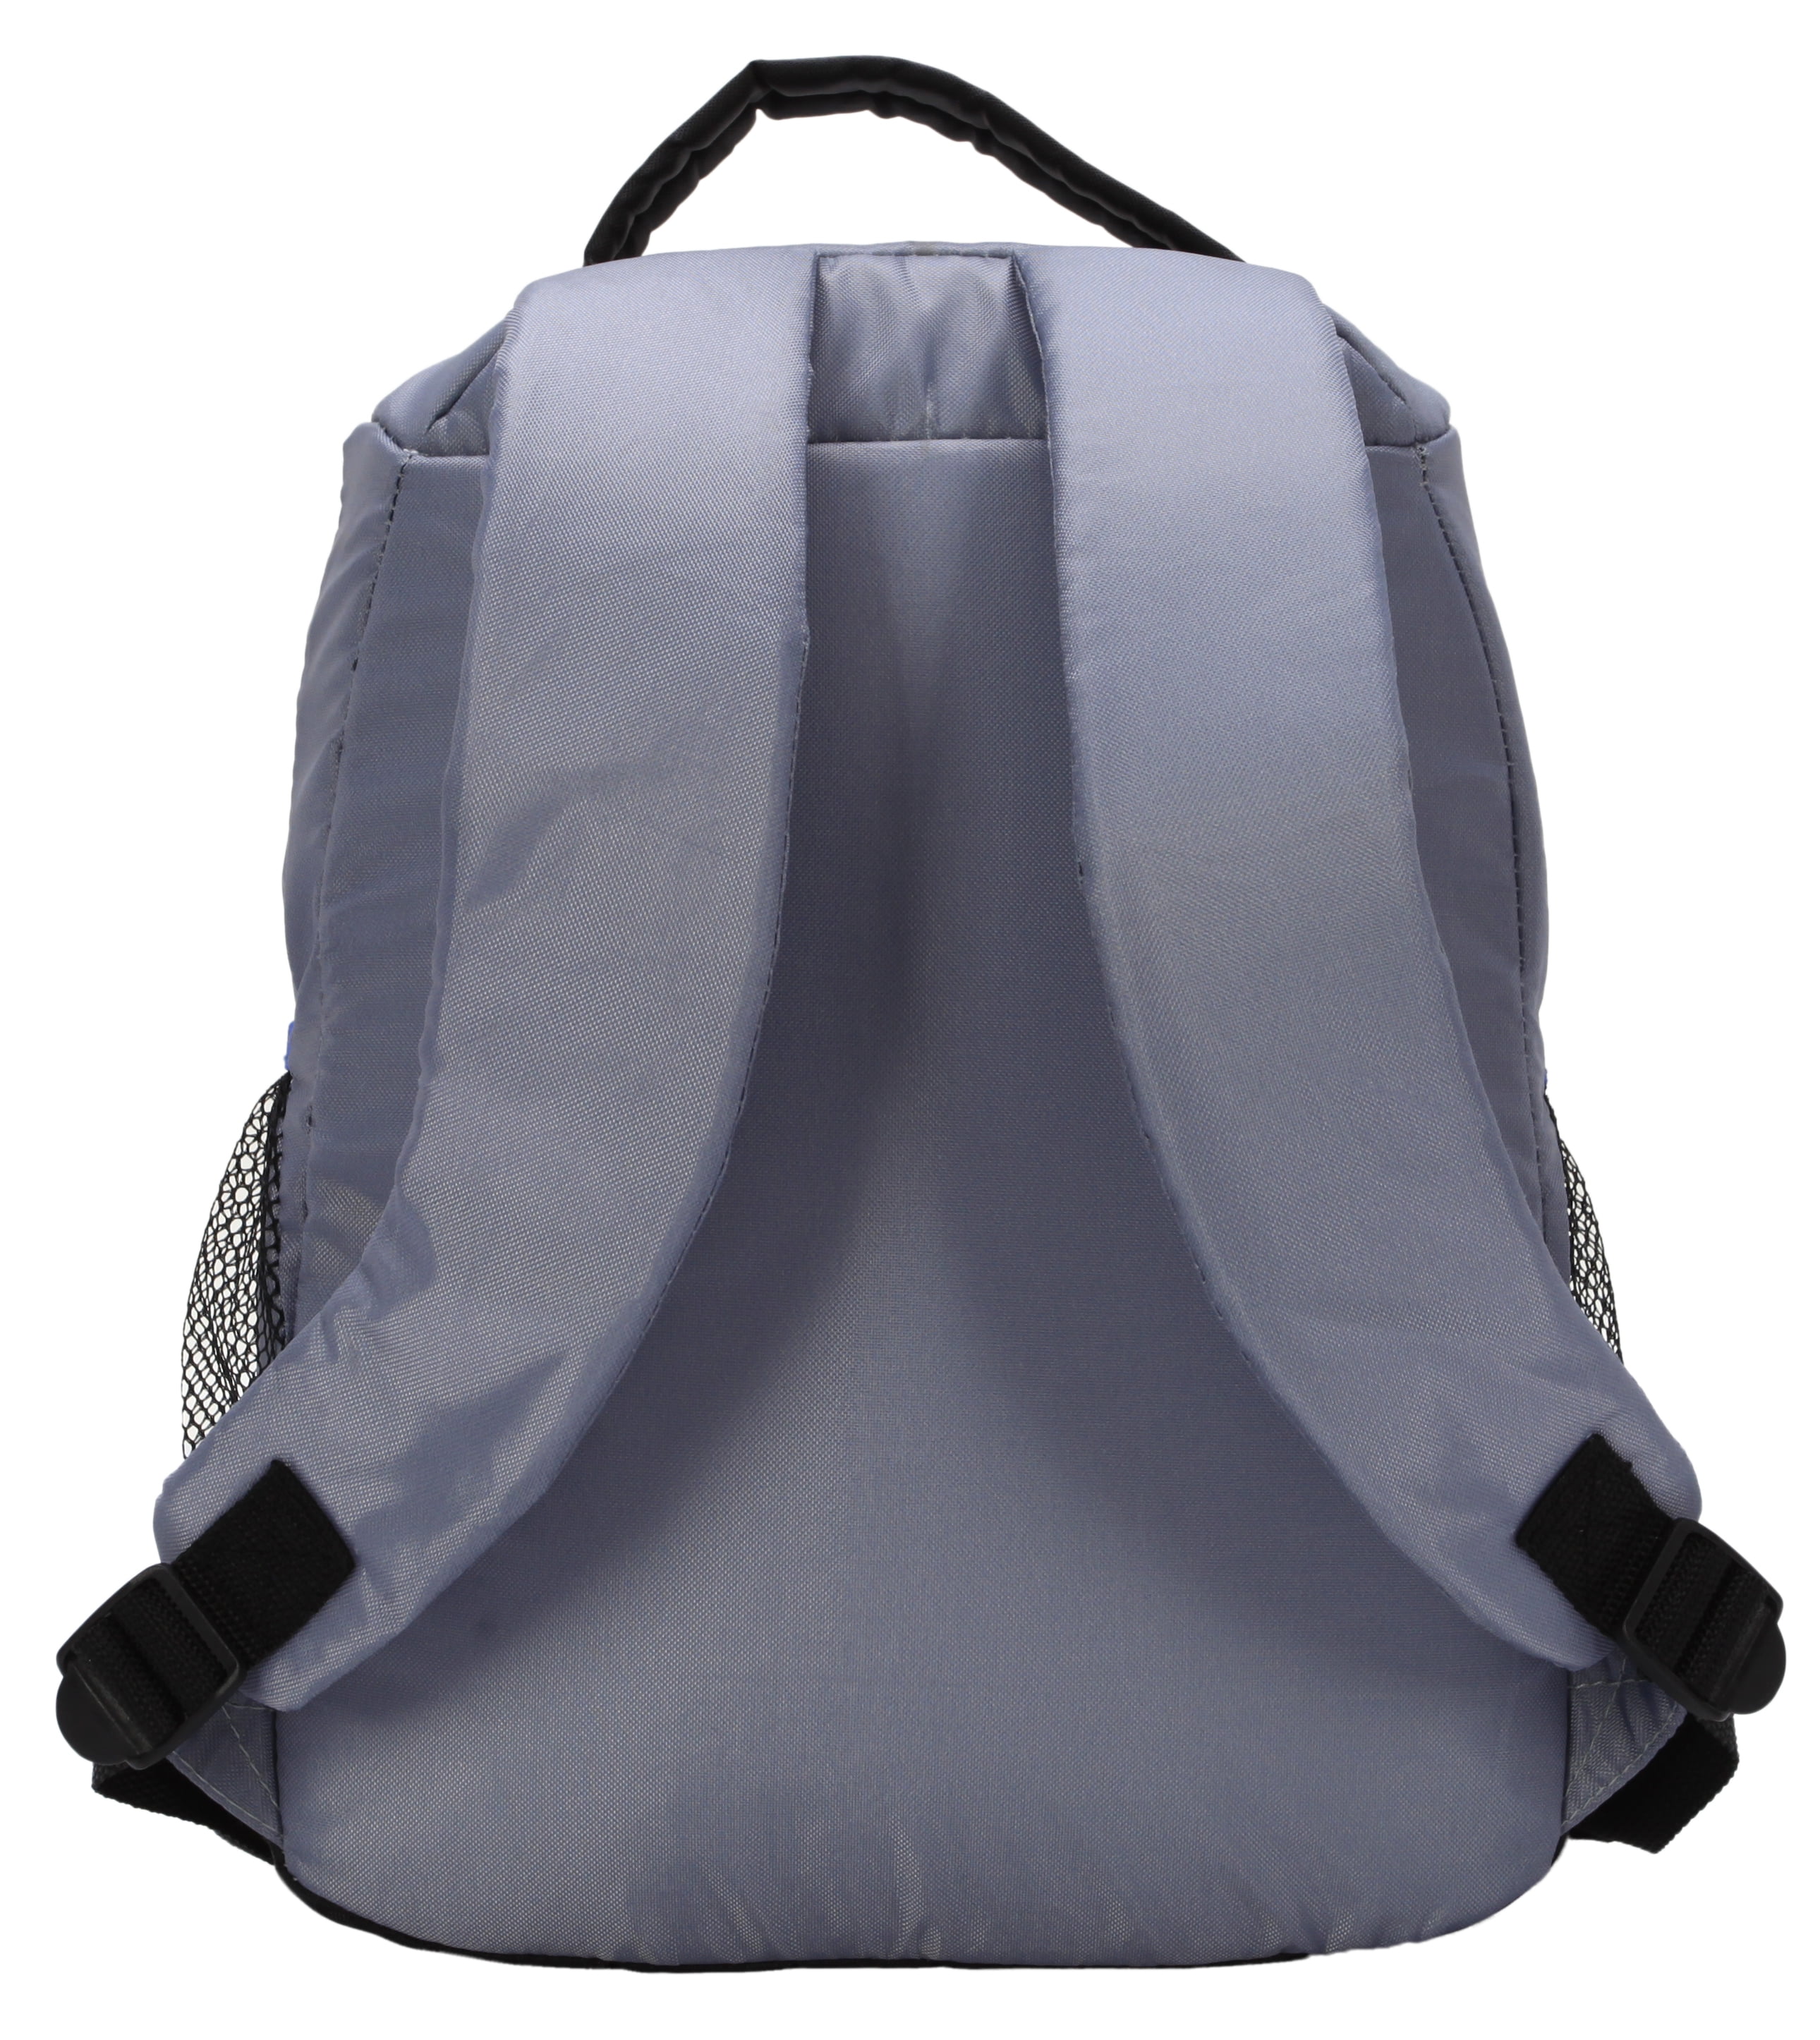 university of louisville backpack cooler